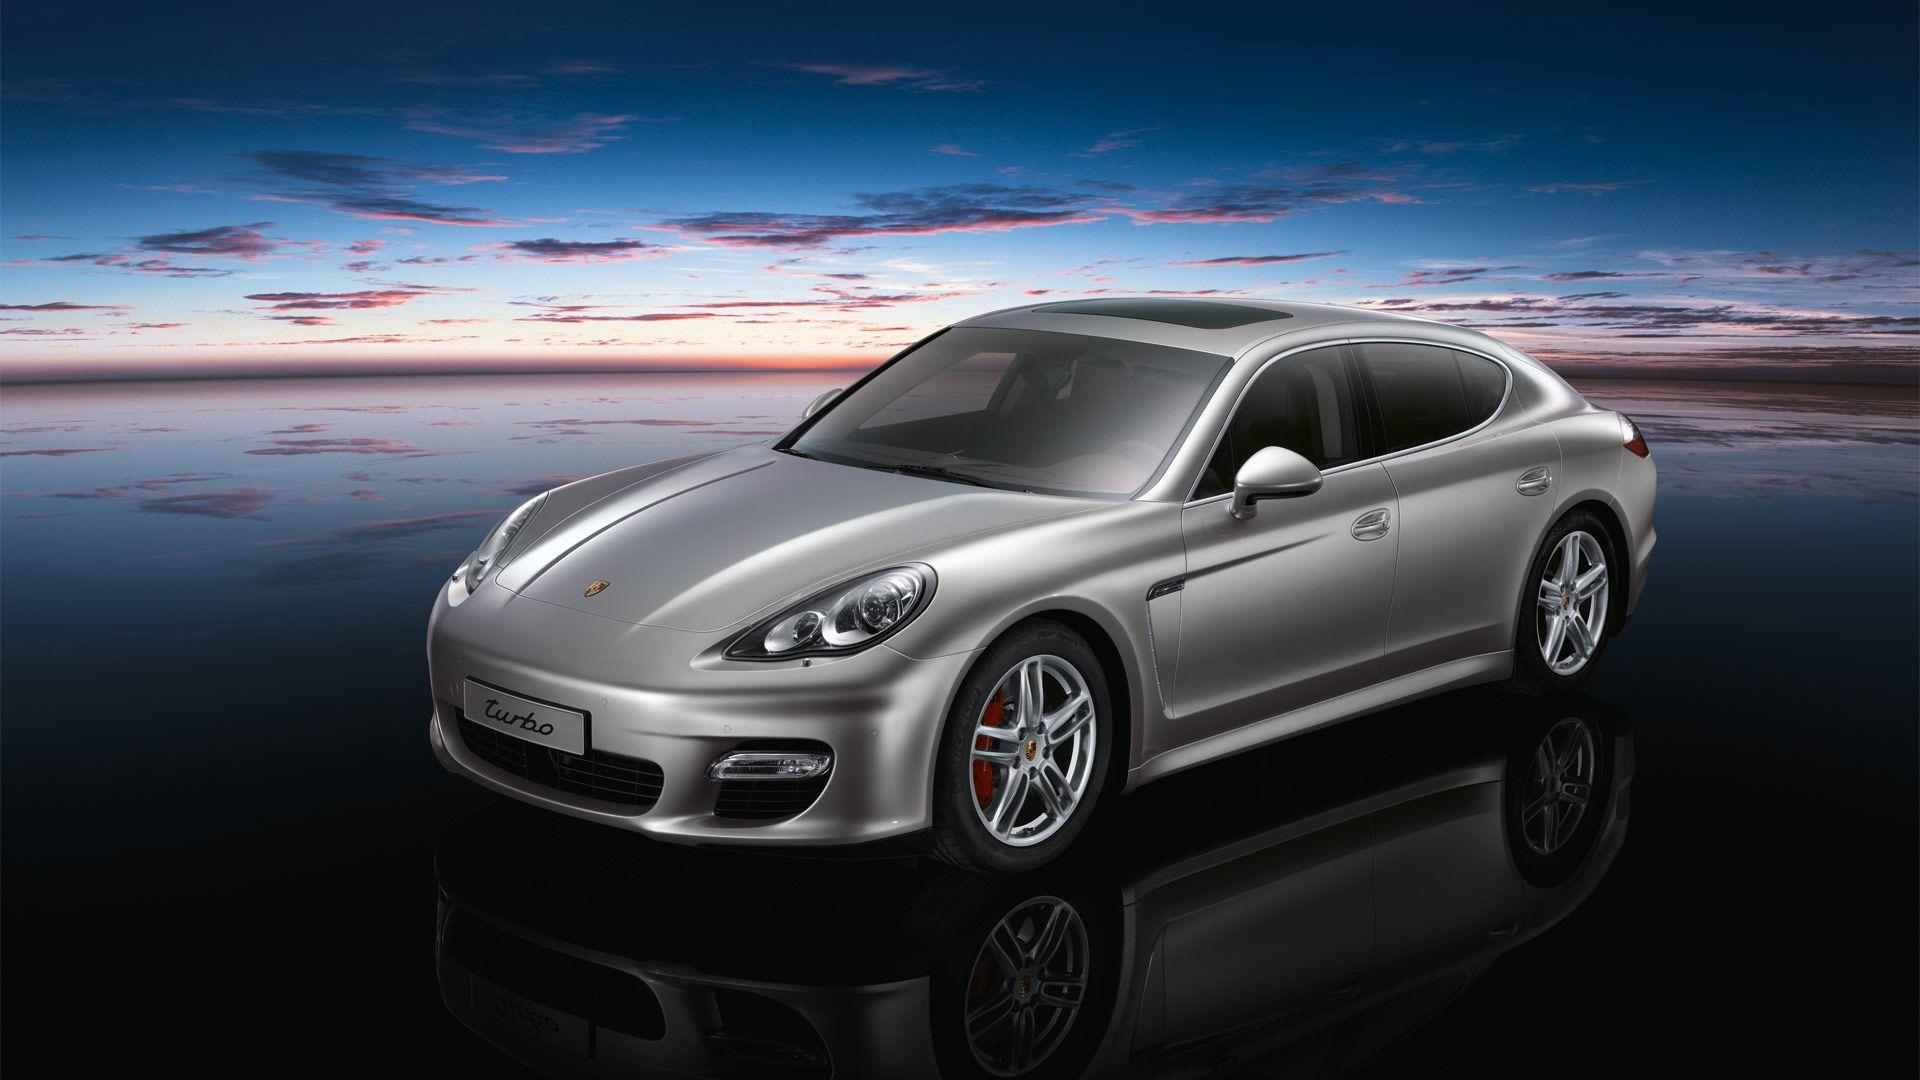 Grey Porsche Panamera Turbo Night Sky Background Wallpaper